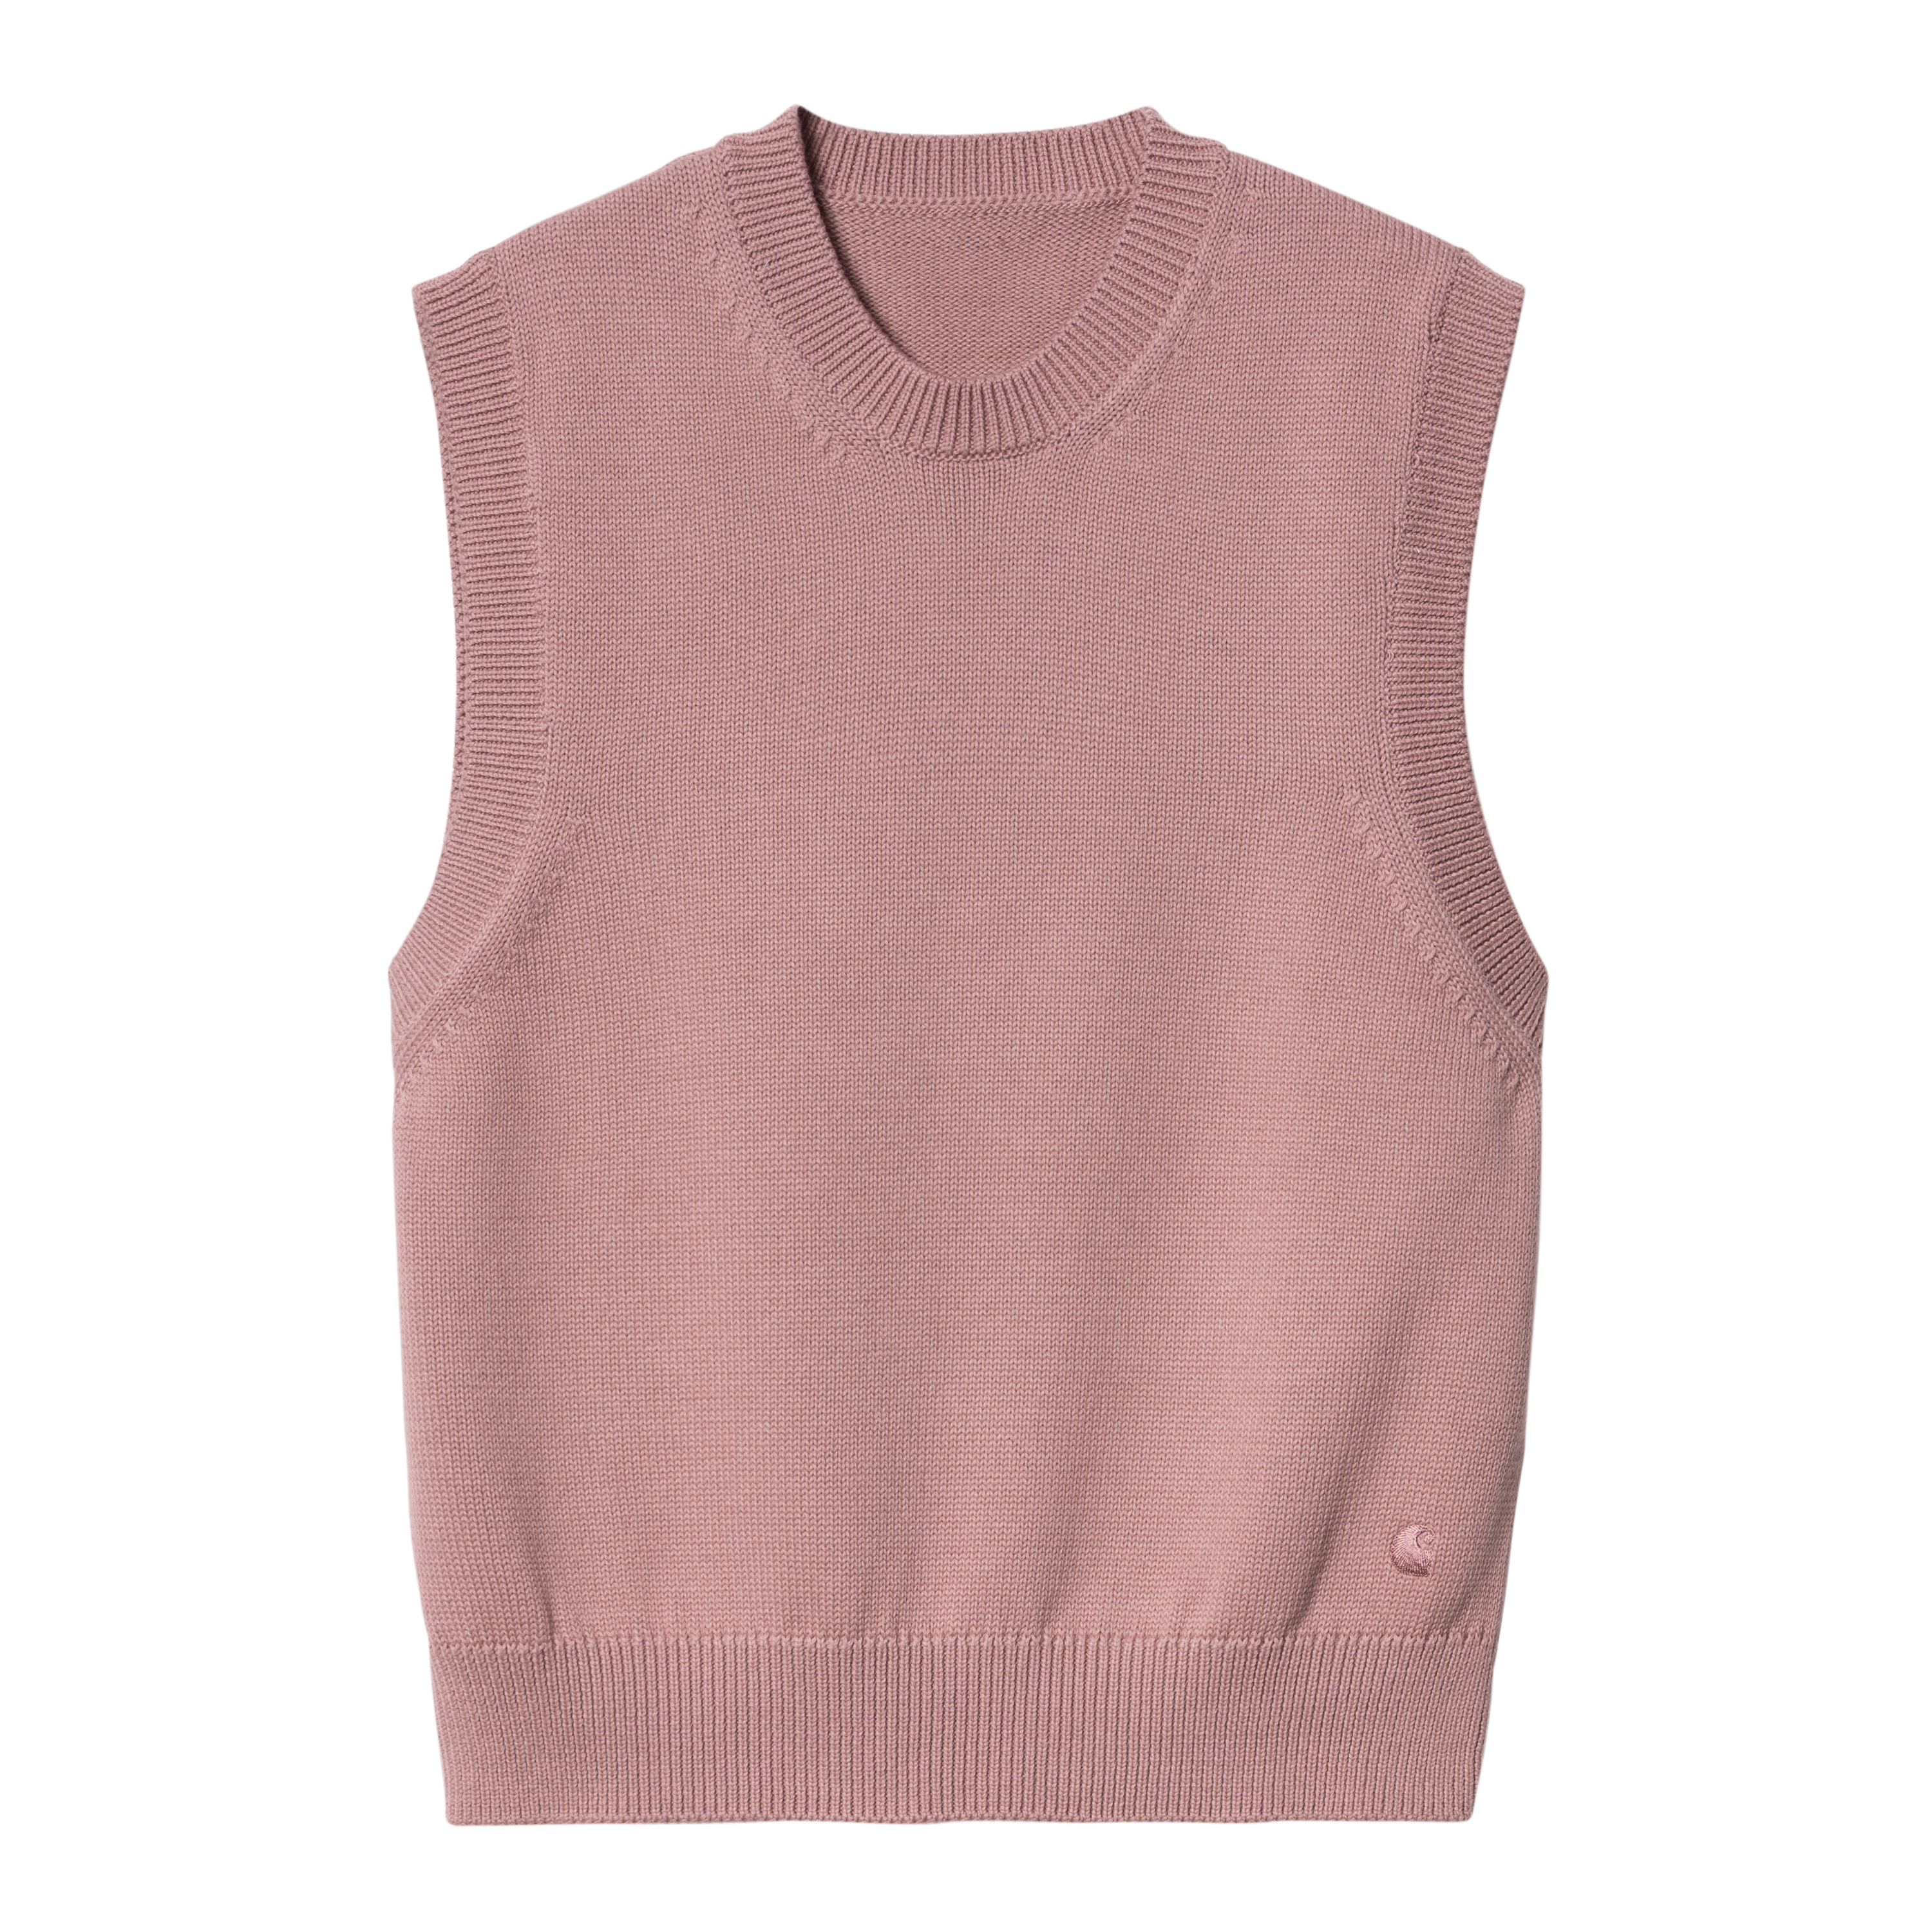 Carhartt WIP Women’s Chester Vest Sweater in Pink